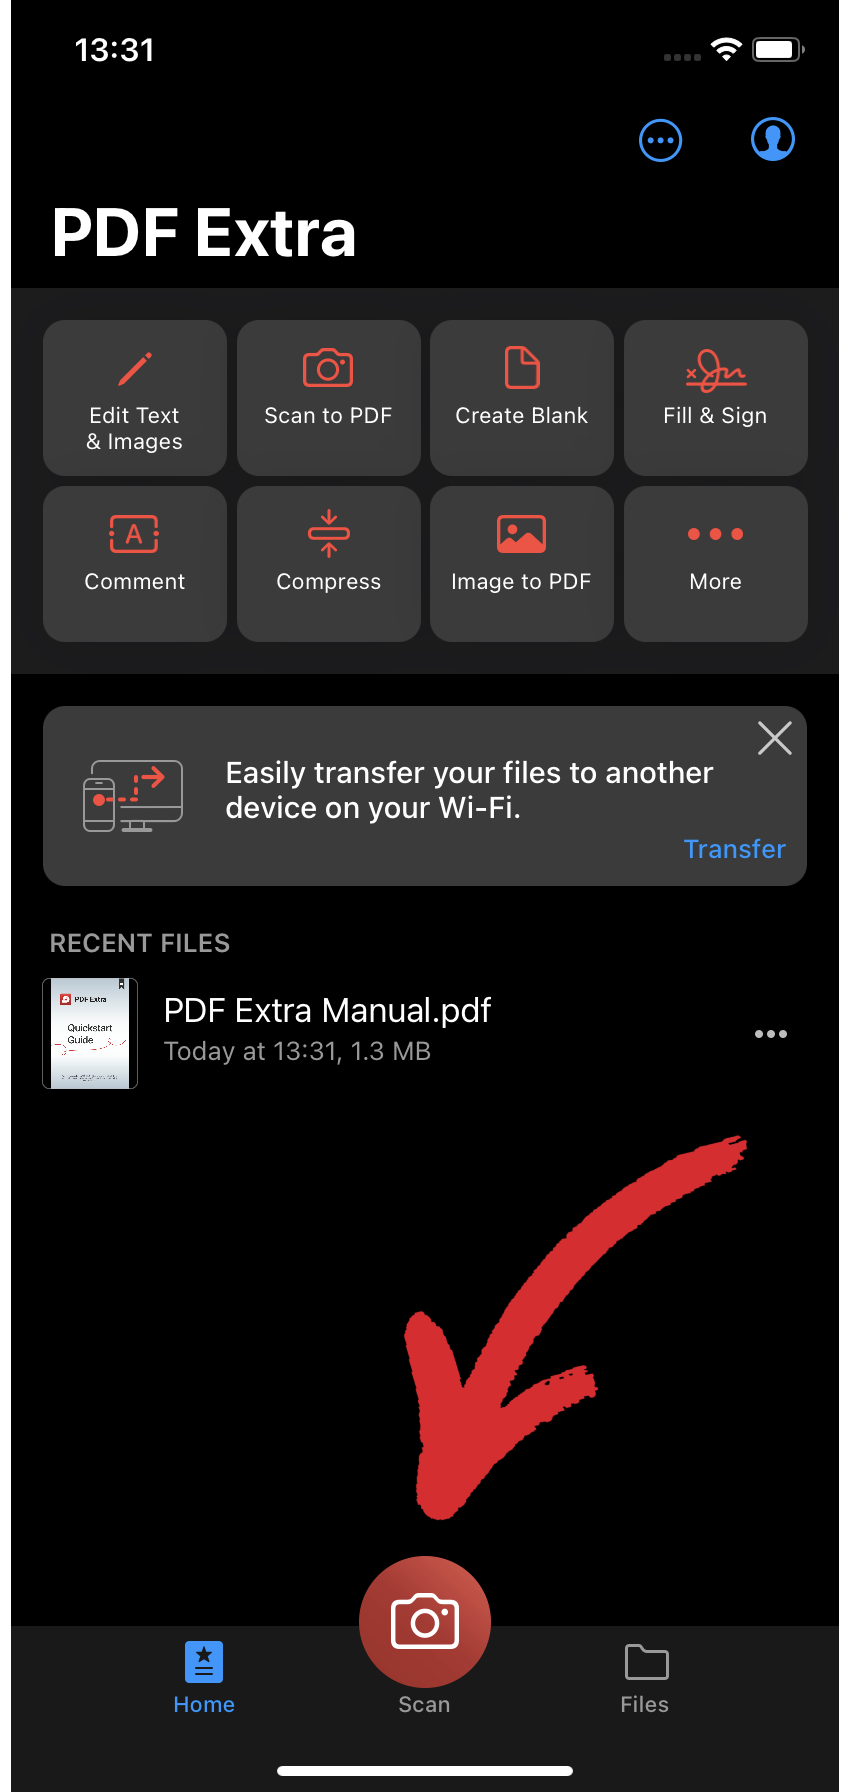 PDF Extra iOS: scanning document